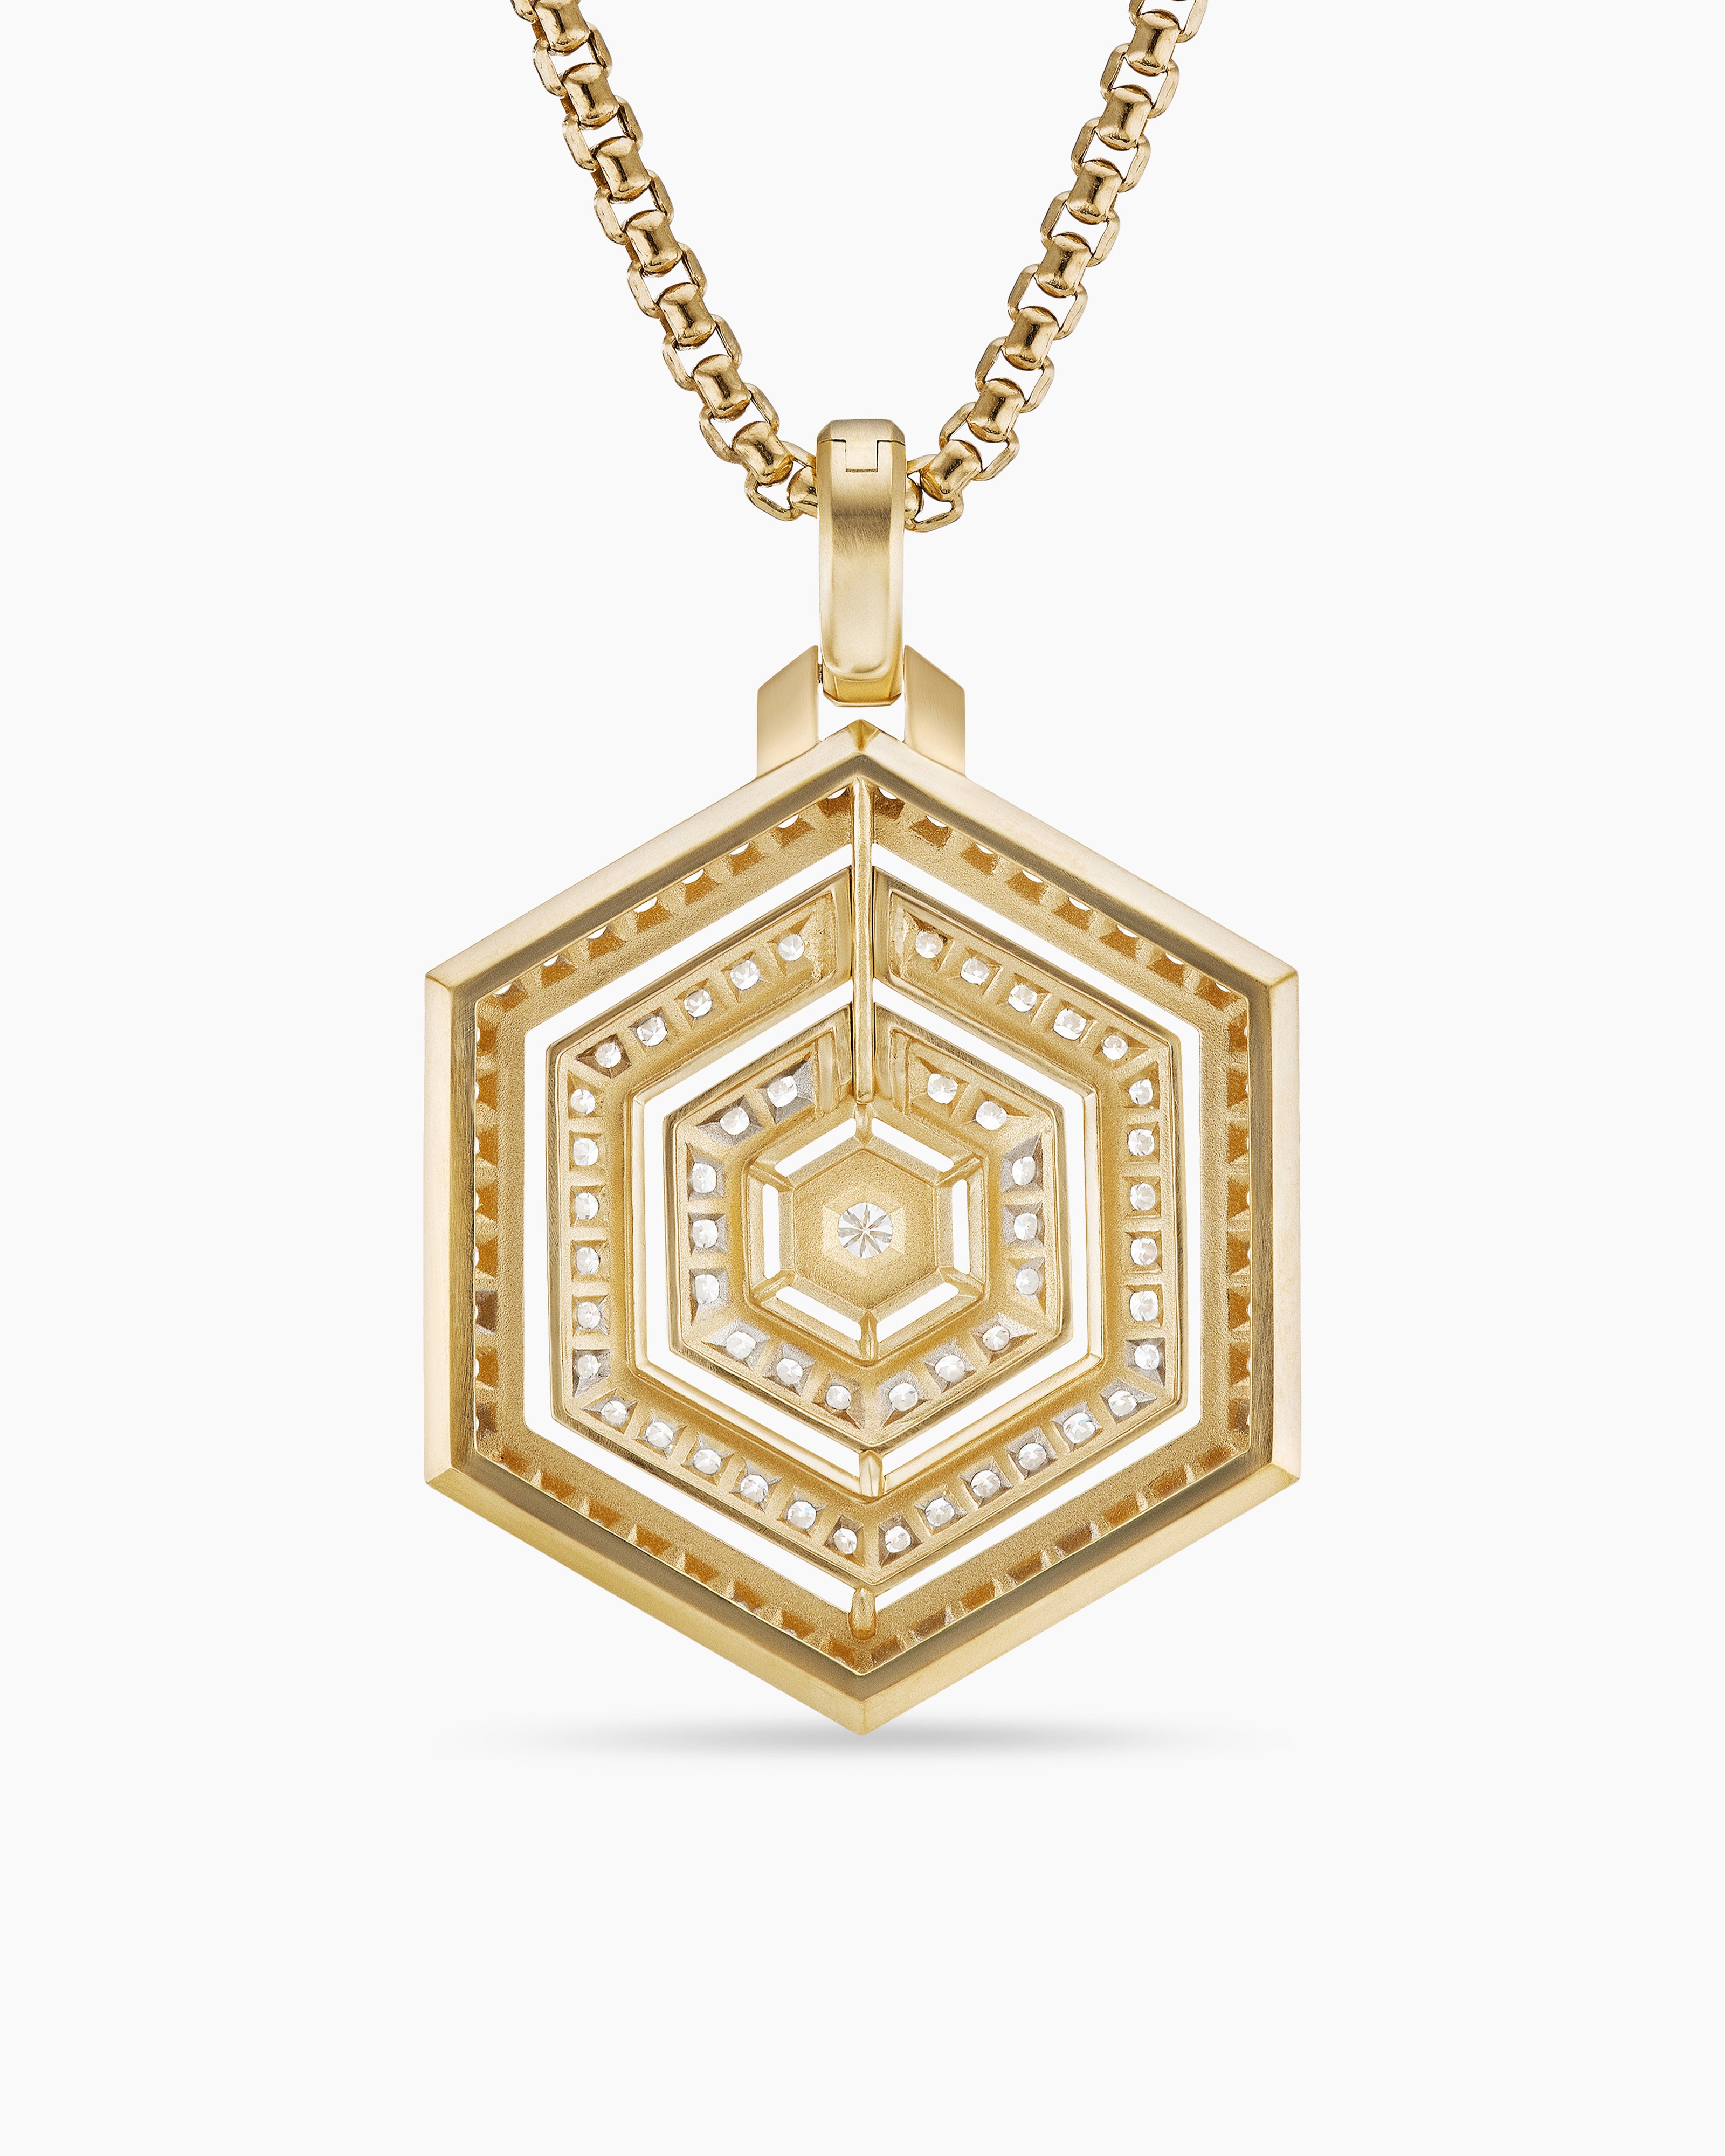 David Yurman Carlyle Pendant in 18K Yellow Gold with Full Pavé Diamonds